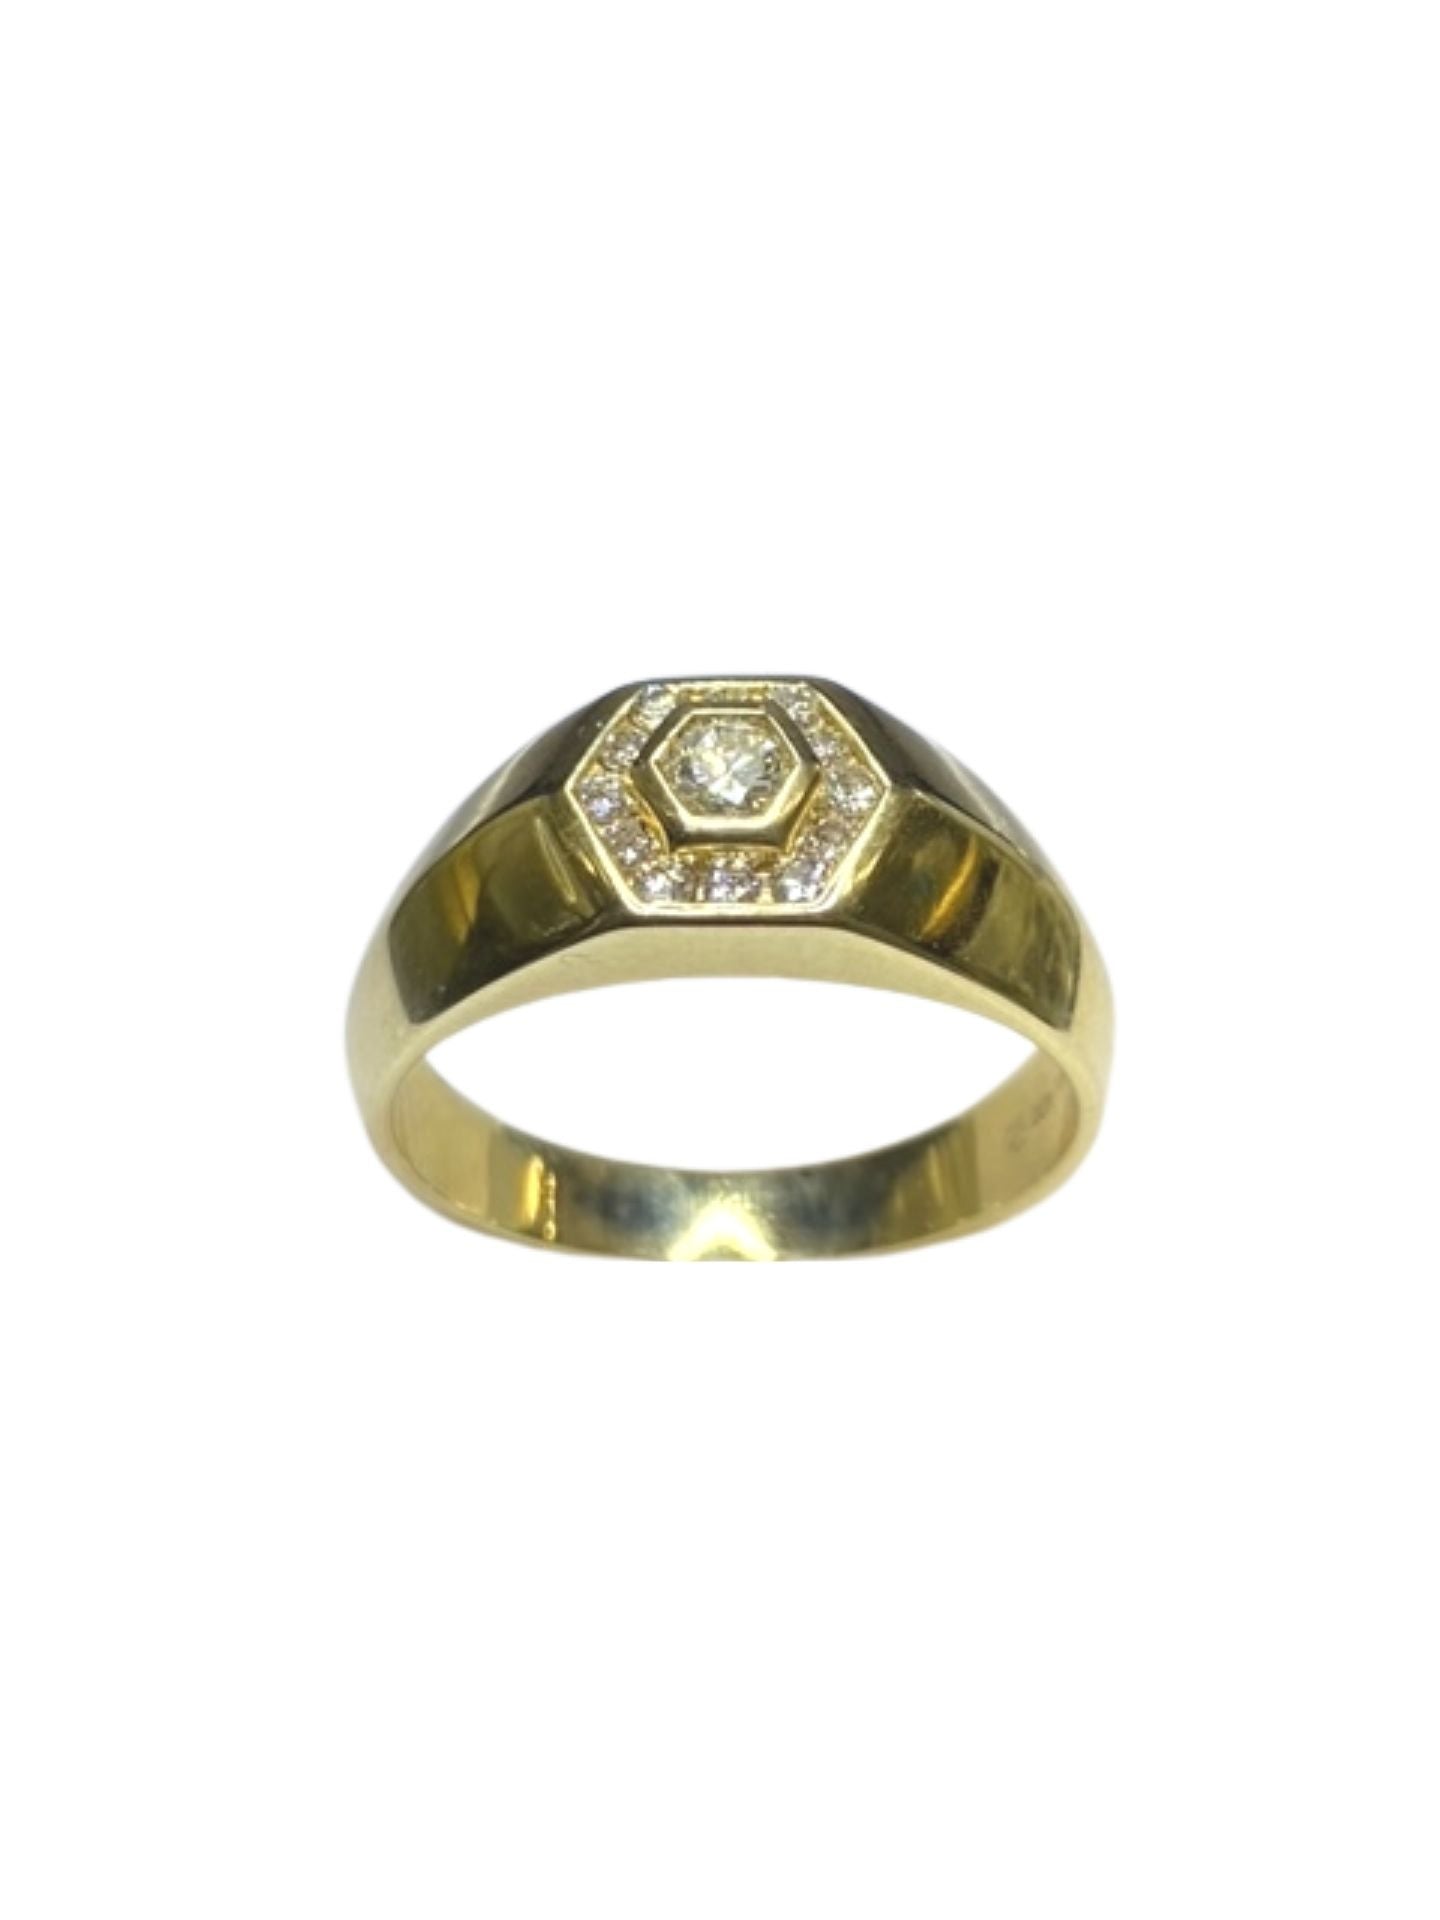 10k Yellow Gold Men's Diamond ring